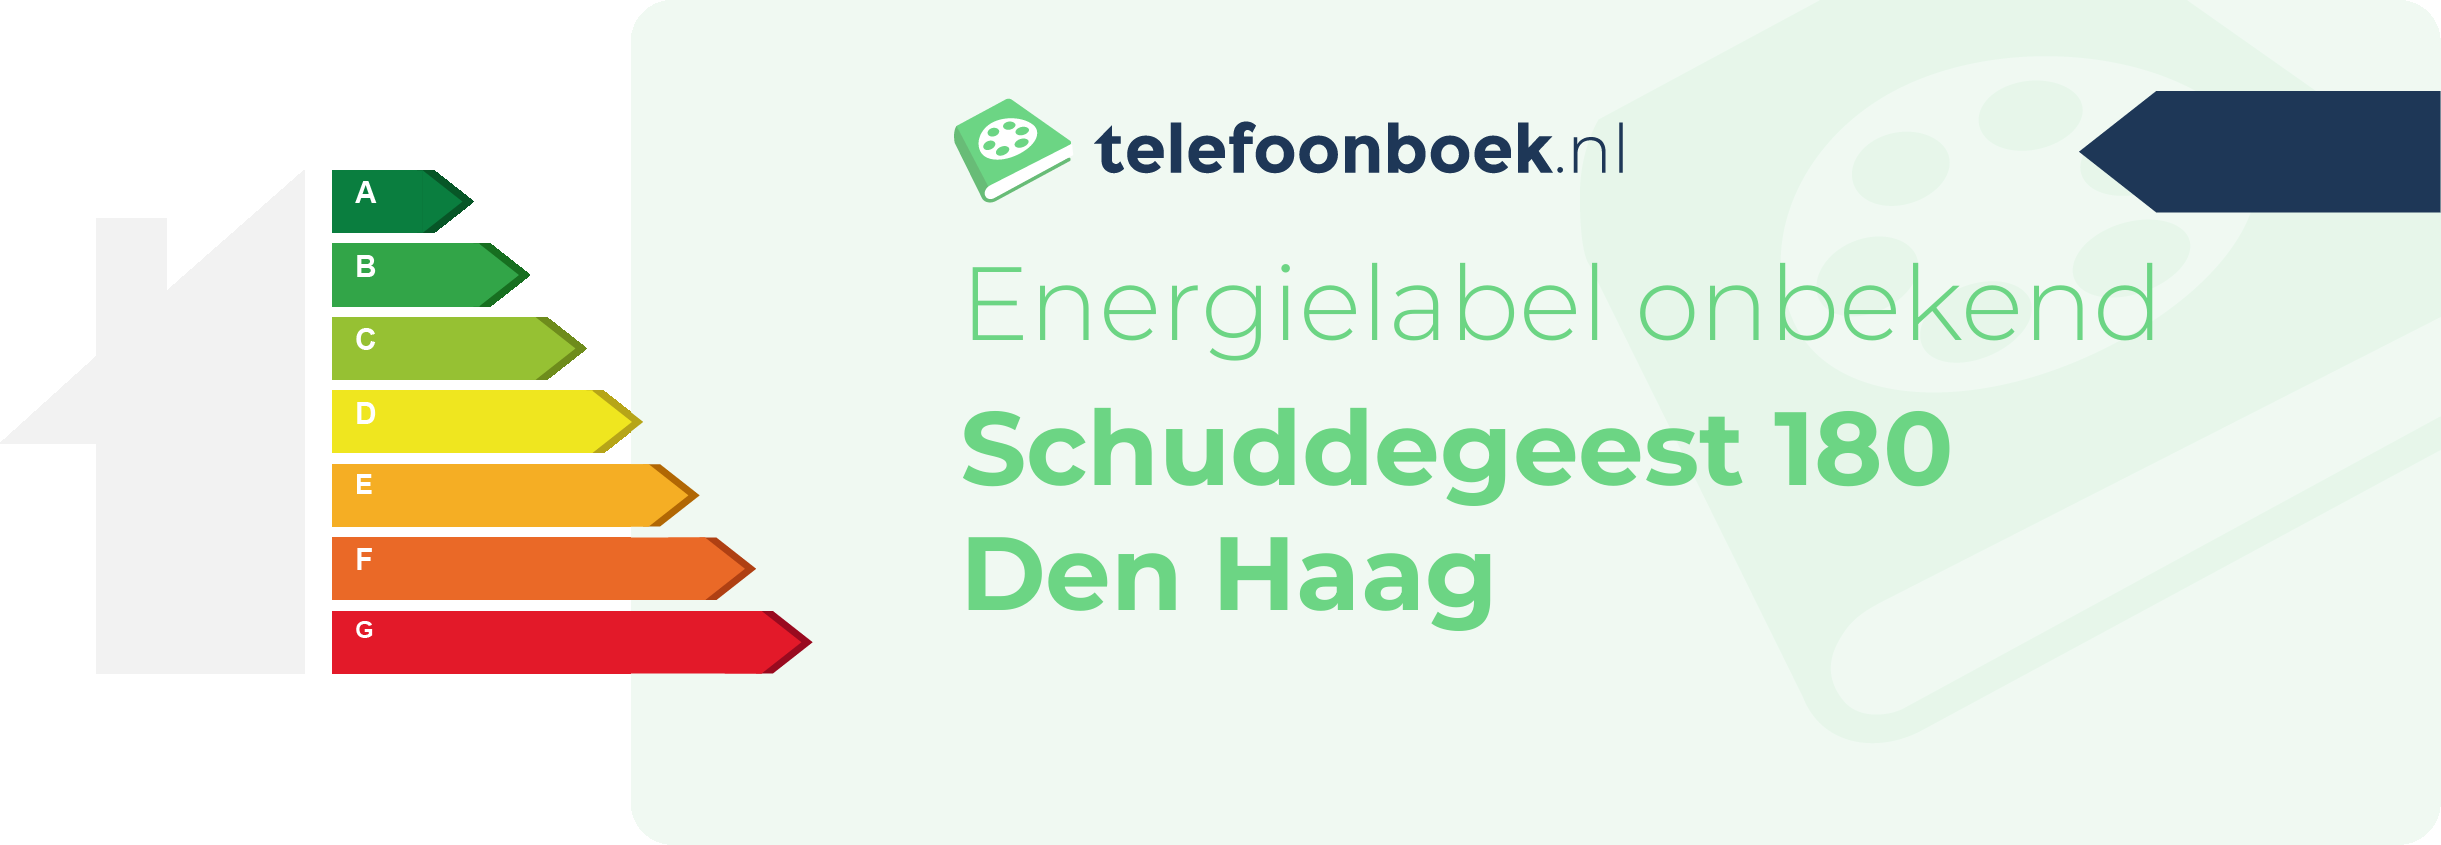 Energielabel Schuddegeest 180 Den Haag